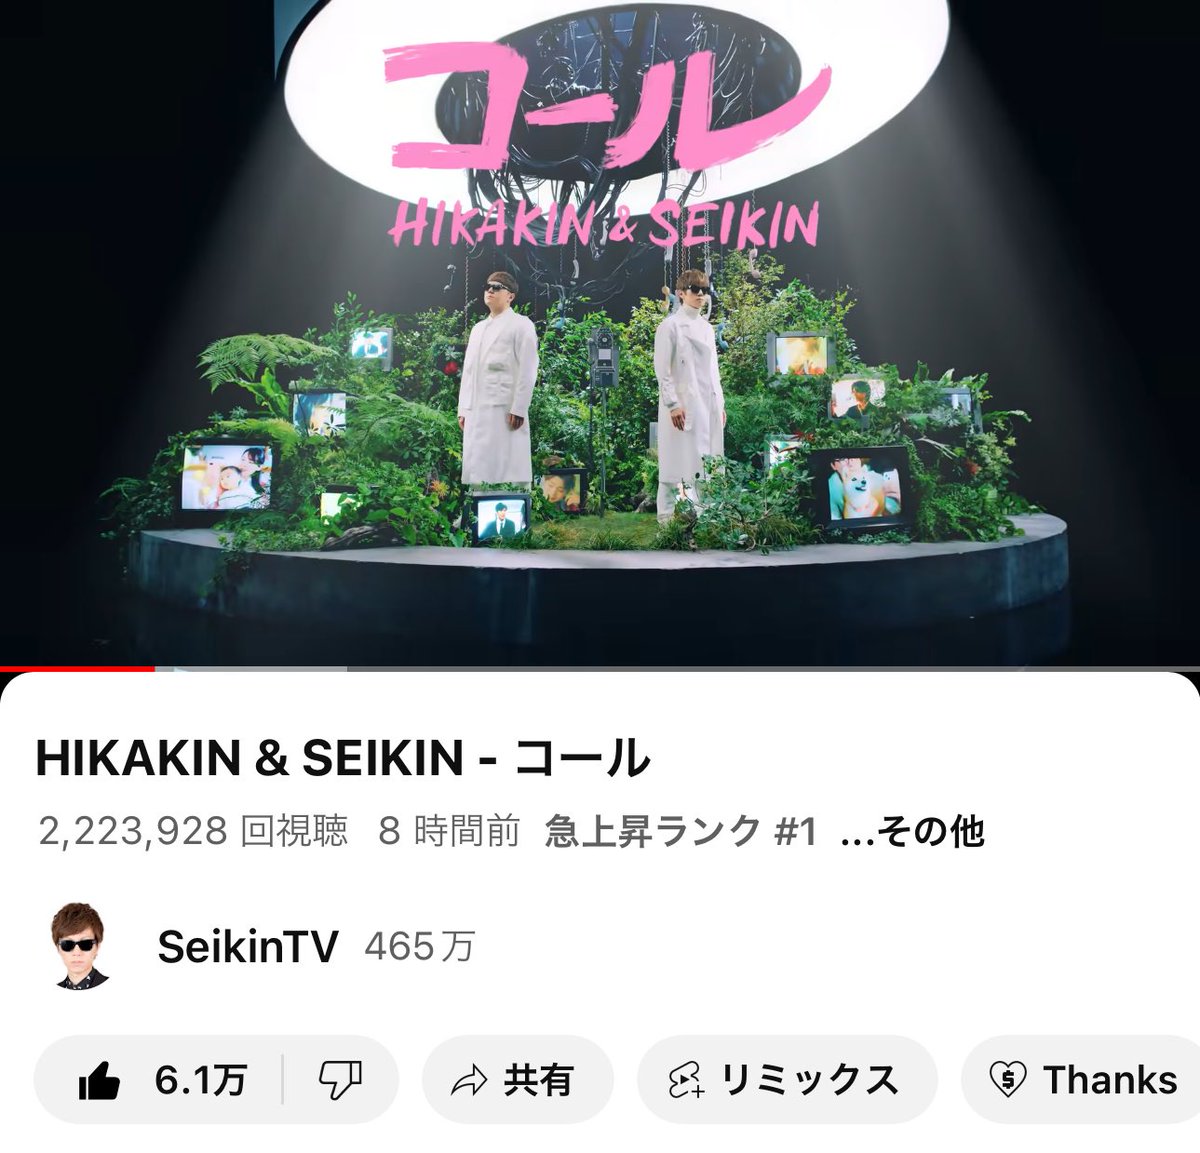 YouTube急上昇1位📞 ありがとうございます。 HIKAKIN & SEIKIN - コール youtu.be/bR88P1rui7g?si… @YouTube #ヒカキン #セイキン #コール